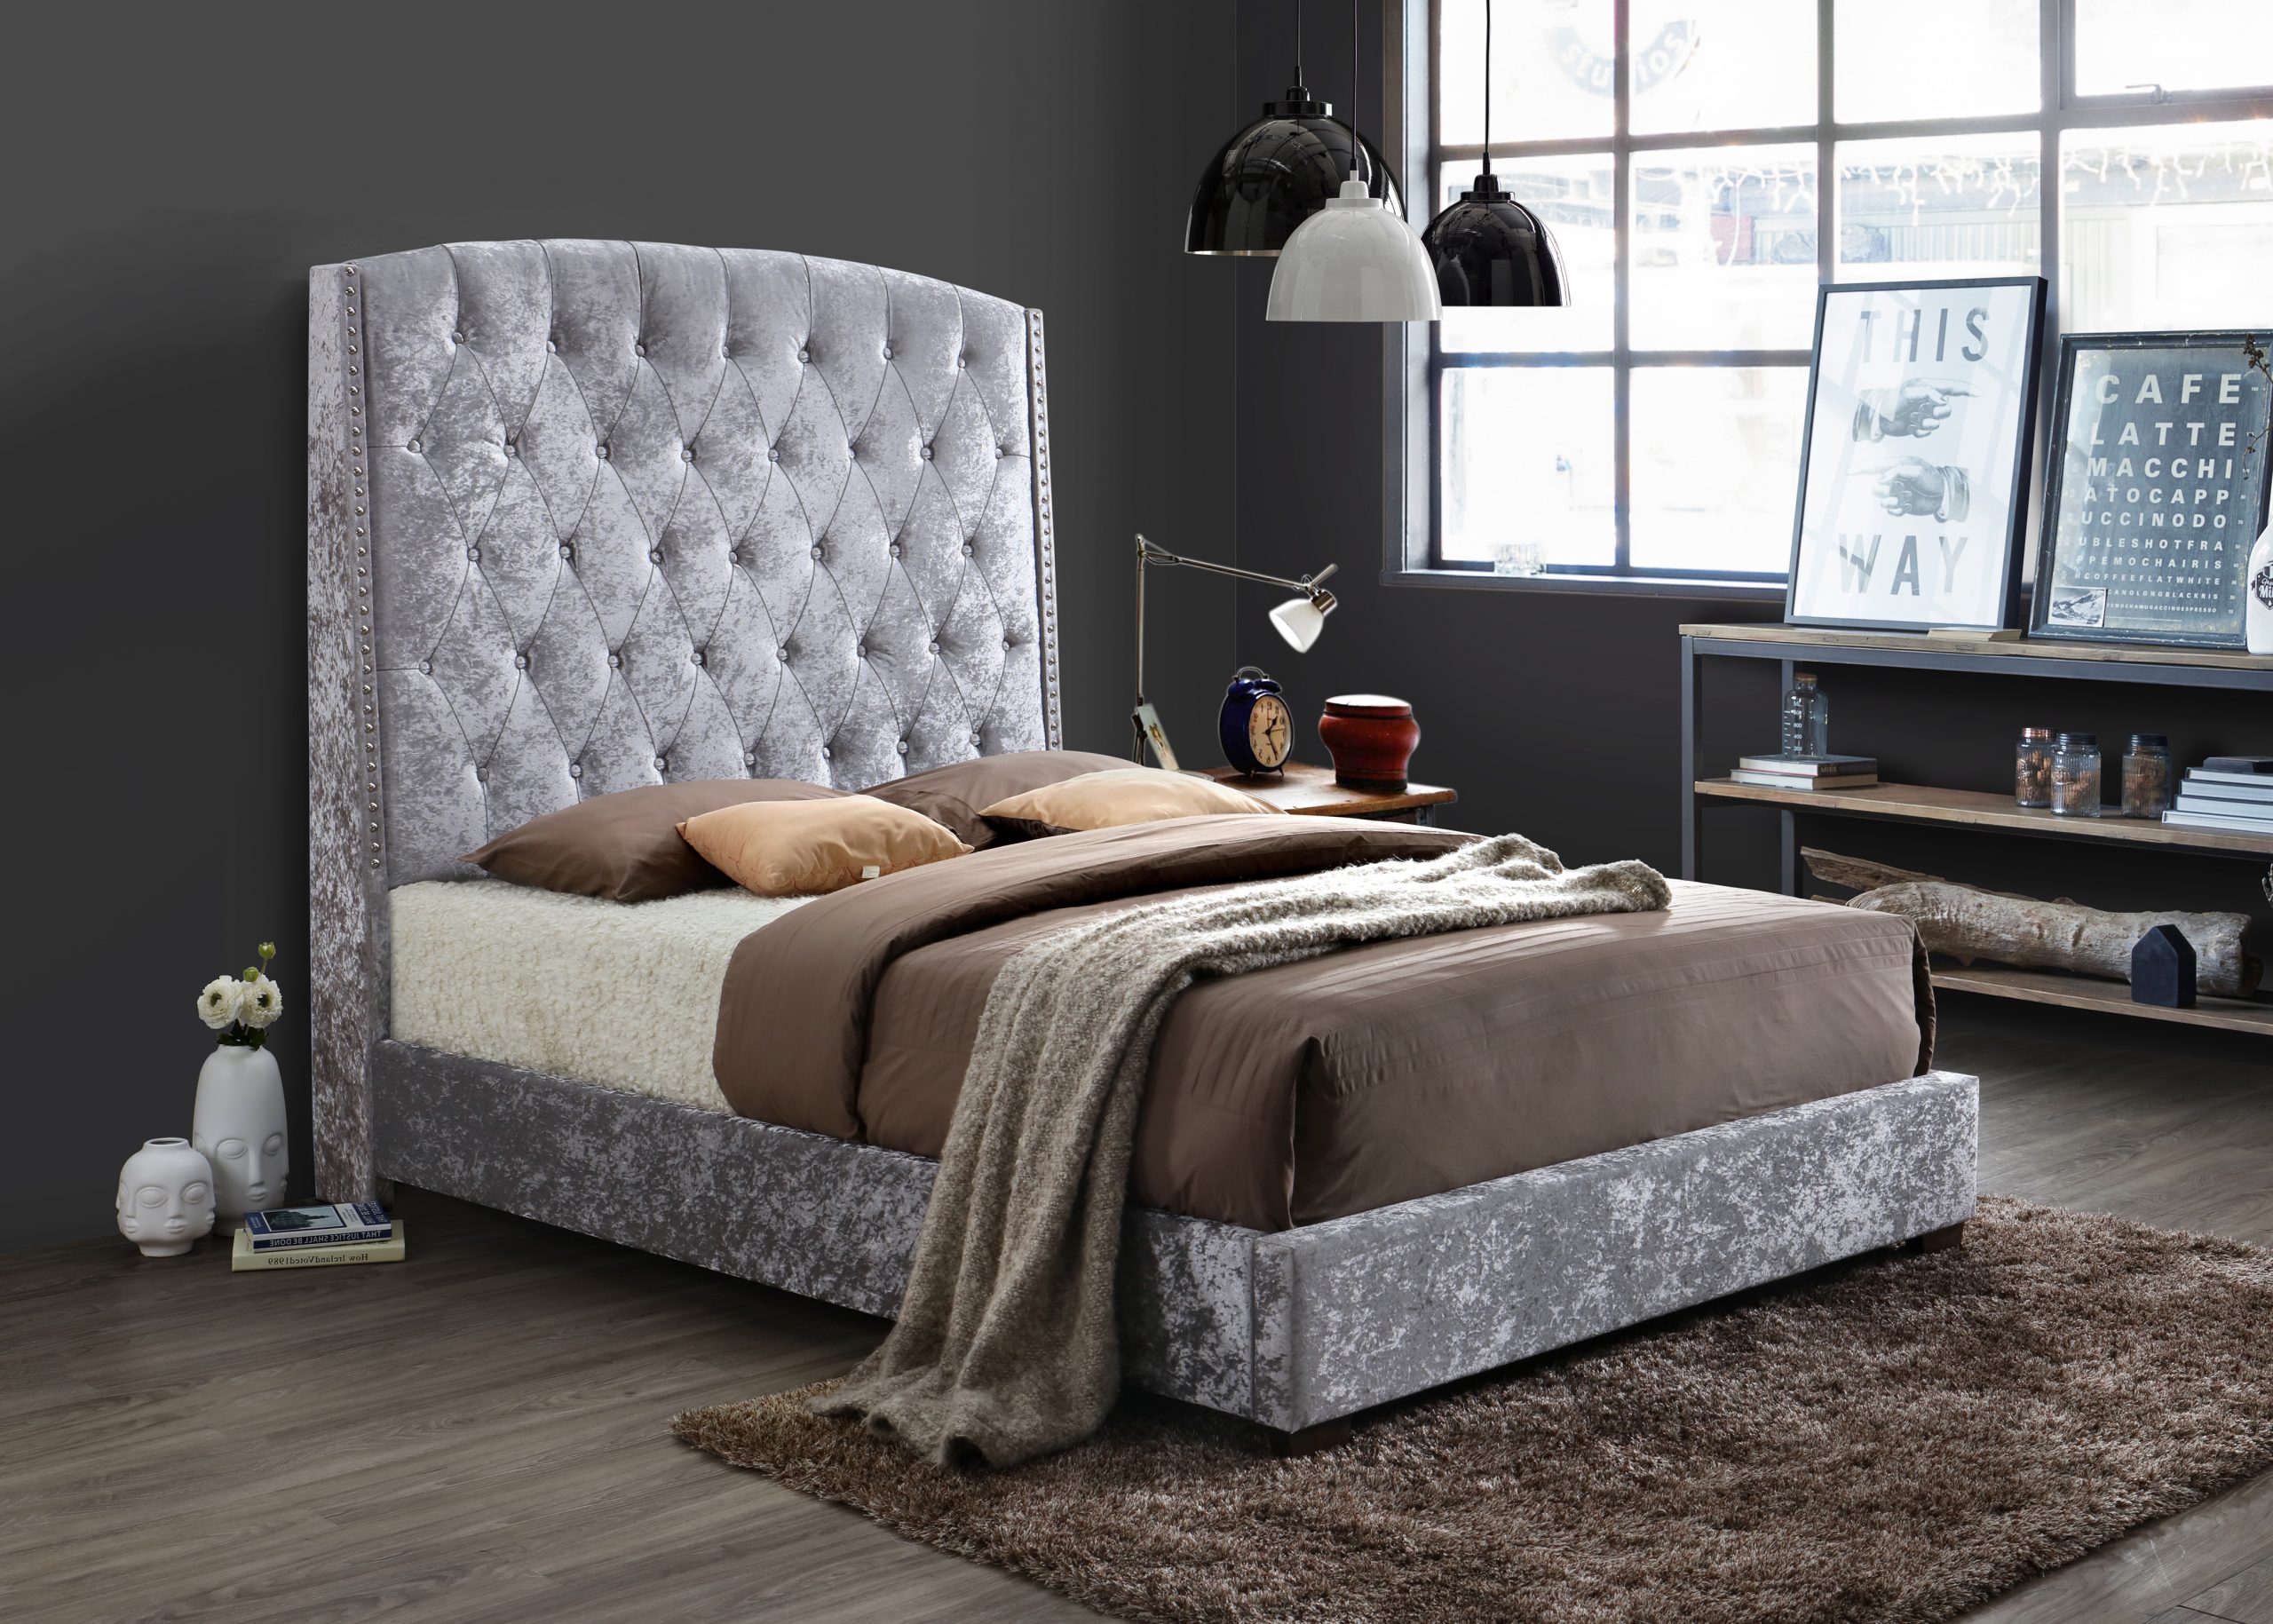 Upholstered Beds